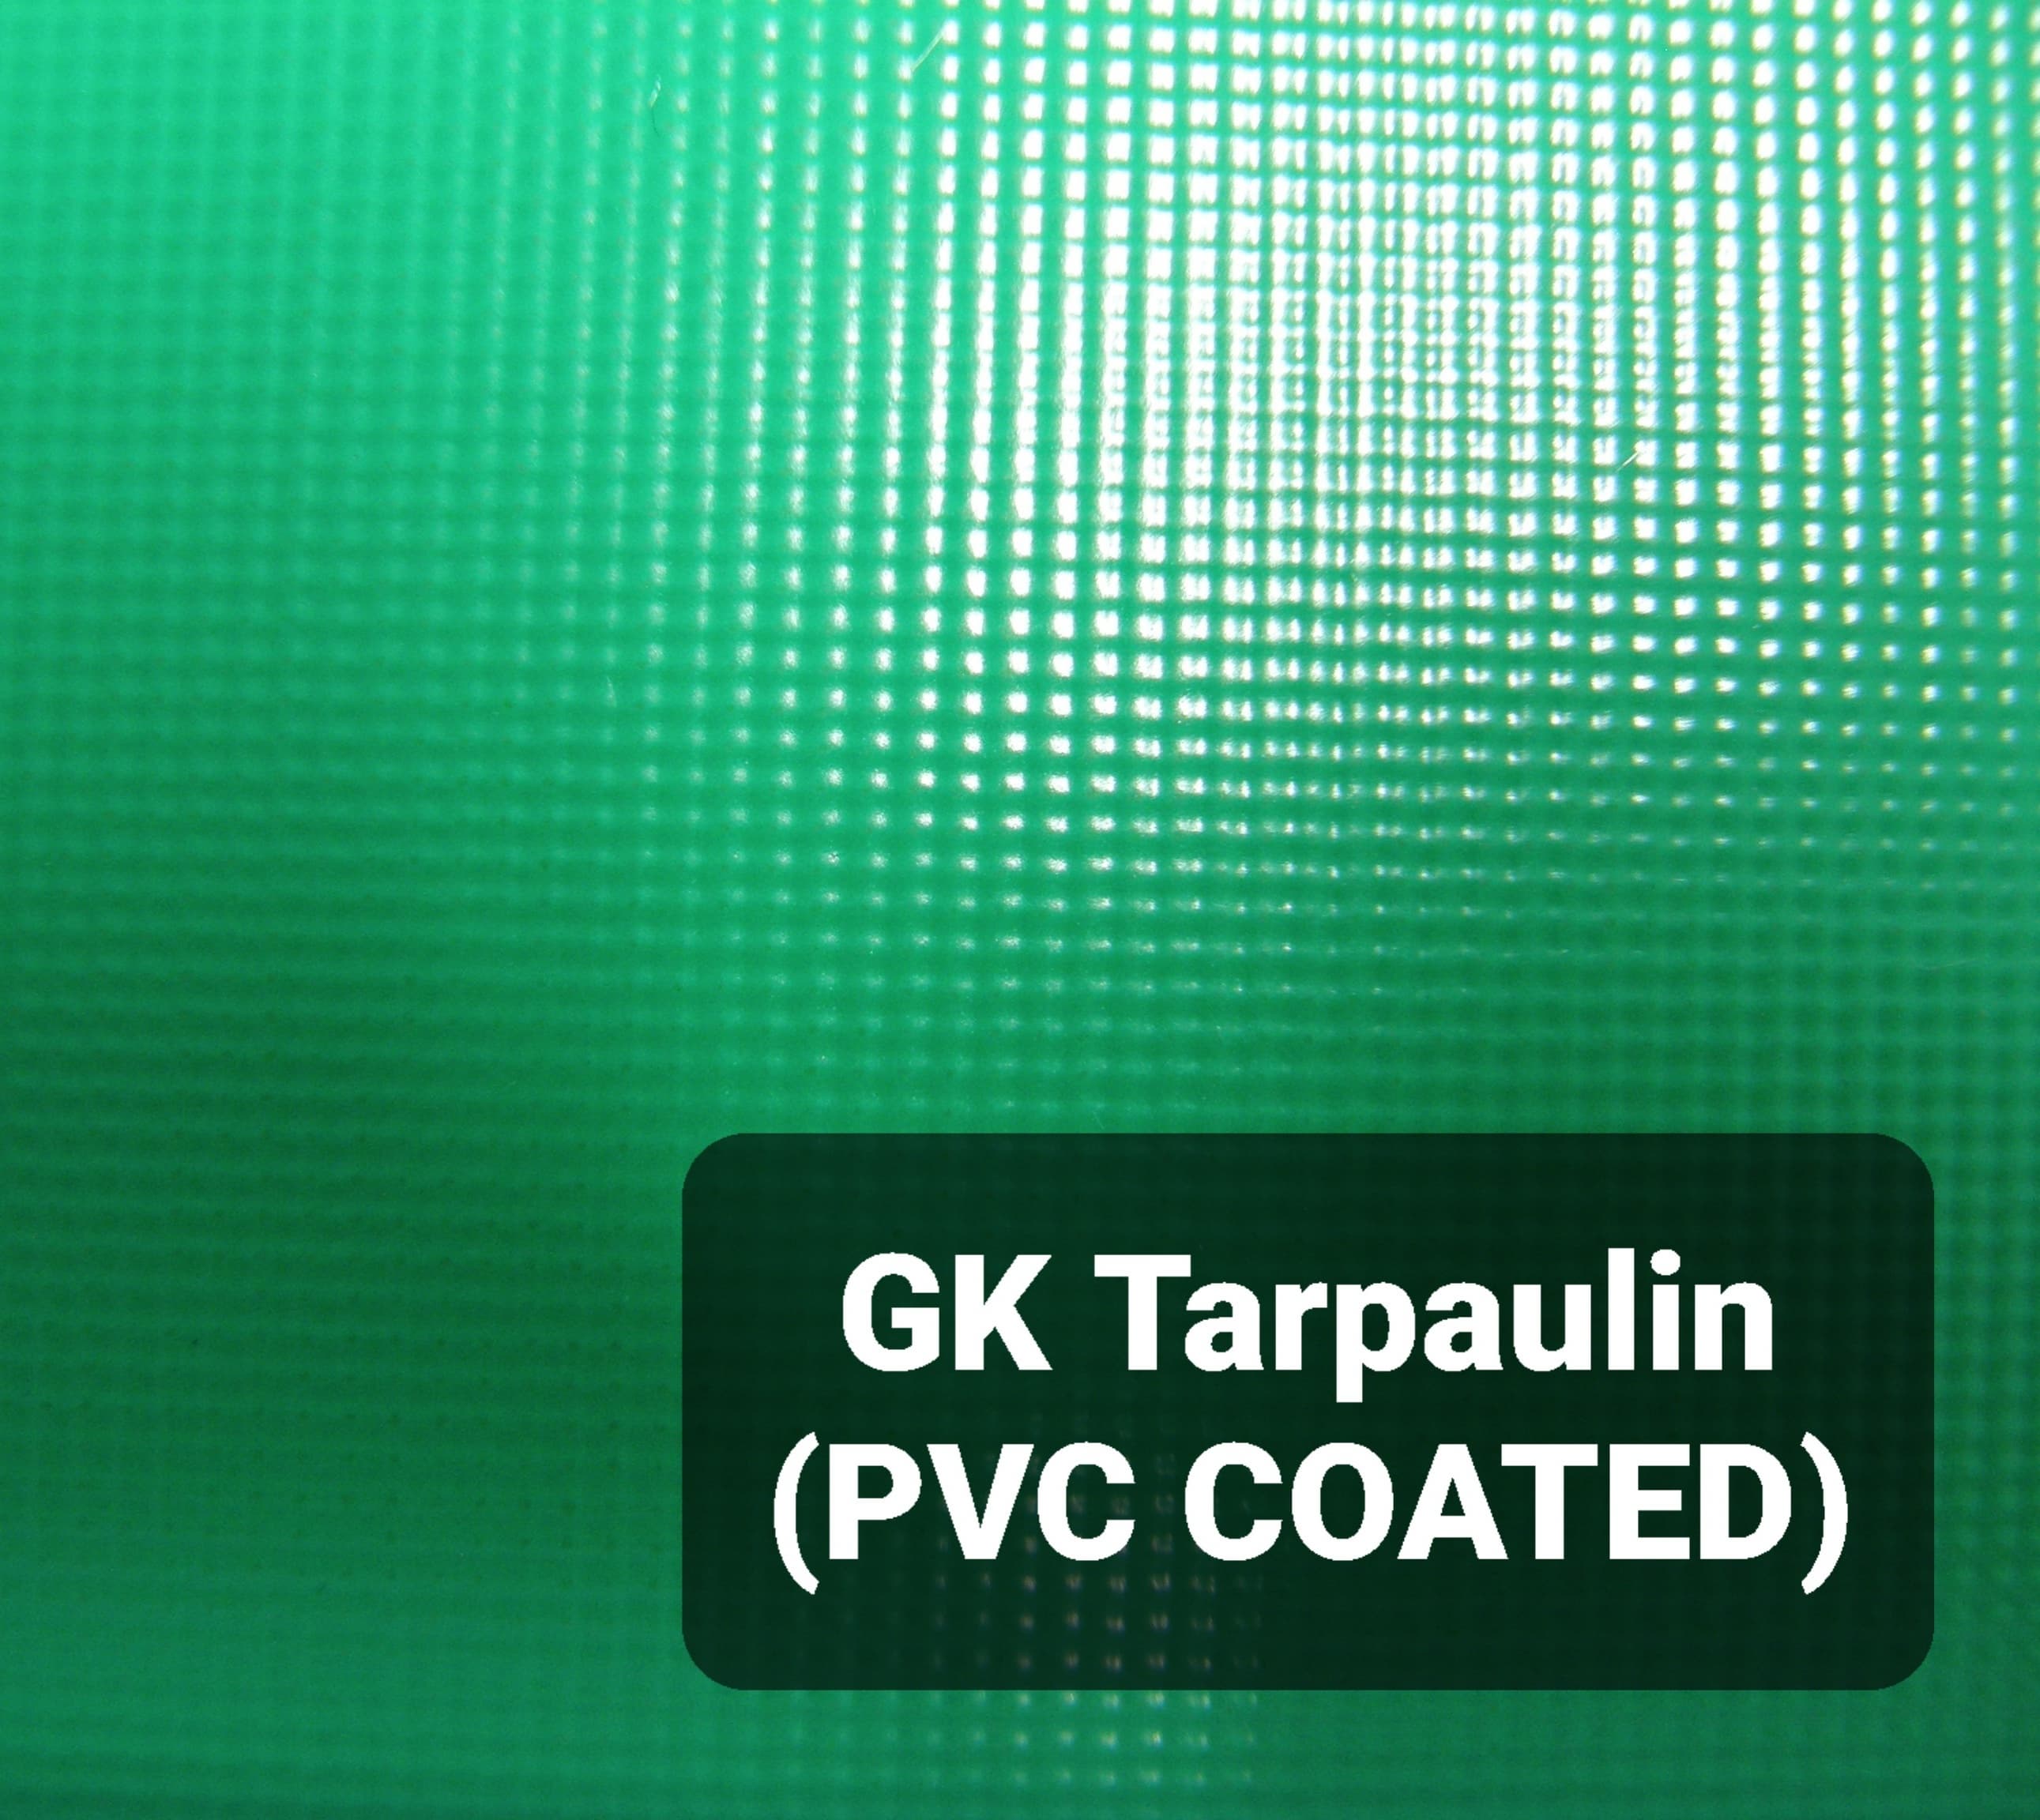 GK Tarpaulin _PVC COATED_